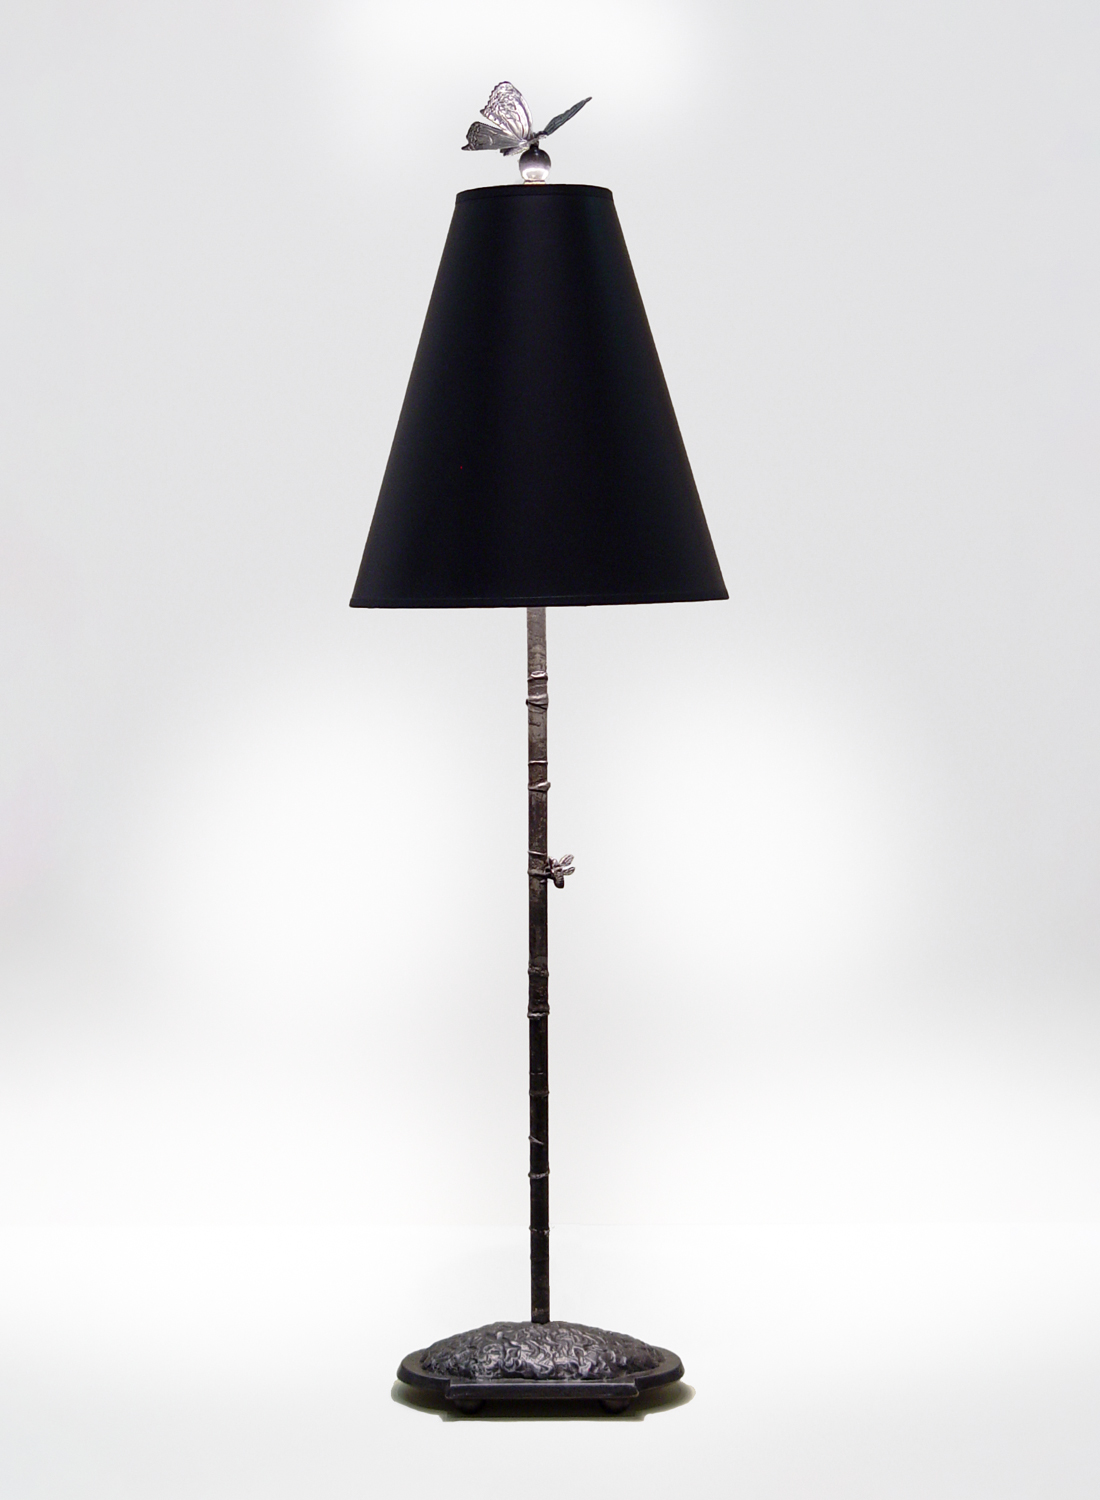 Dark Bamboo Lamp by Charles H. Reinike III